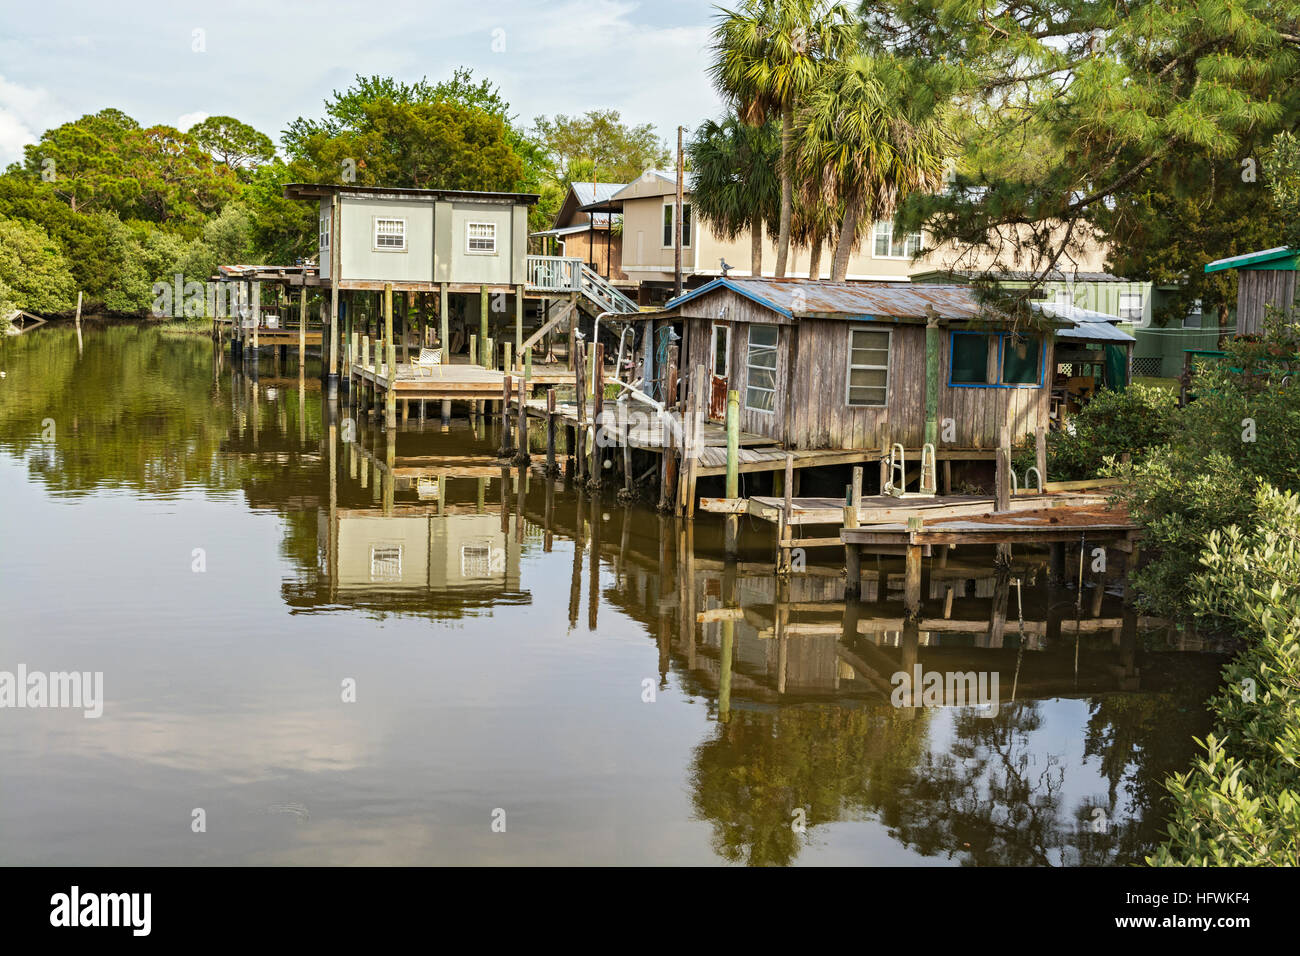 Florida, Cedar Key, private residences on canal bayou Stock Photo